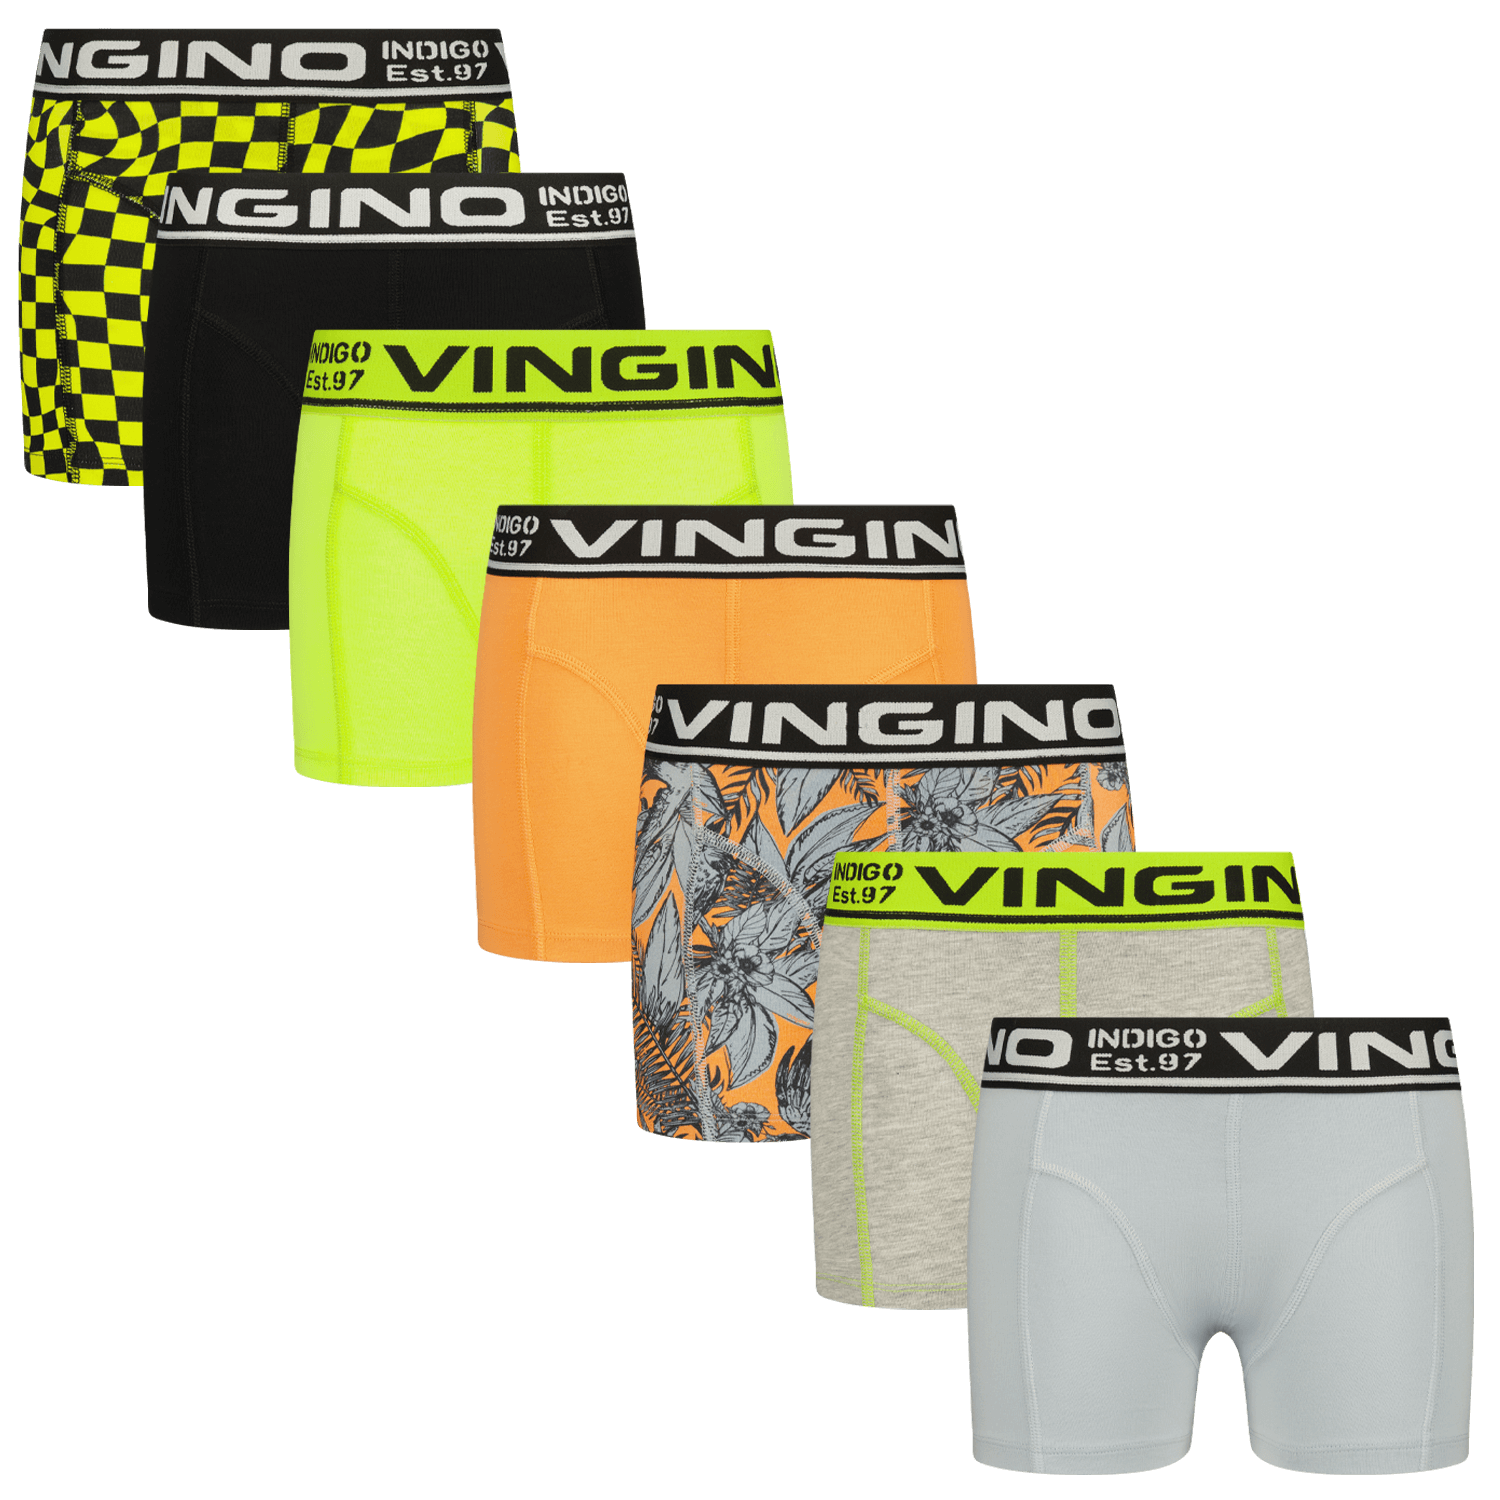 VINGINO Boxershort B-241-7 week 7 pack